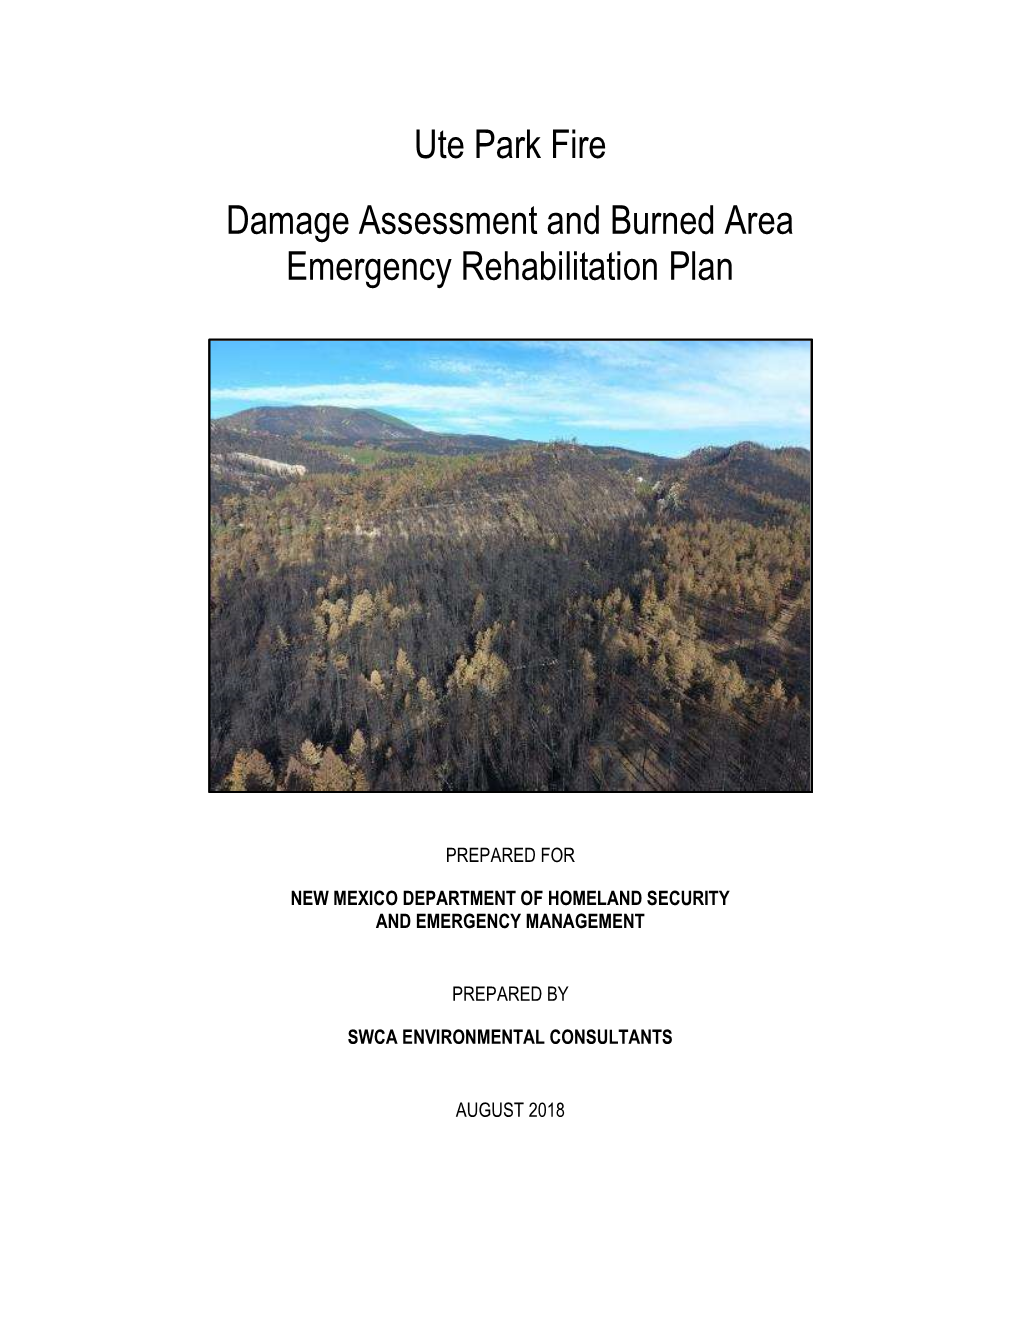 Ute Park Fire Damage Assessment and Burned Area Emergency Rehabilitation Plan